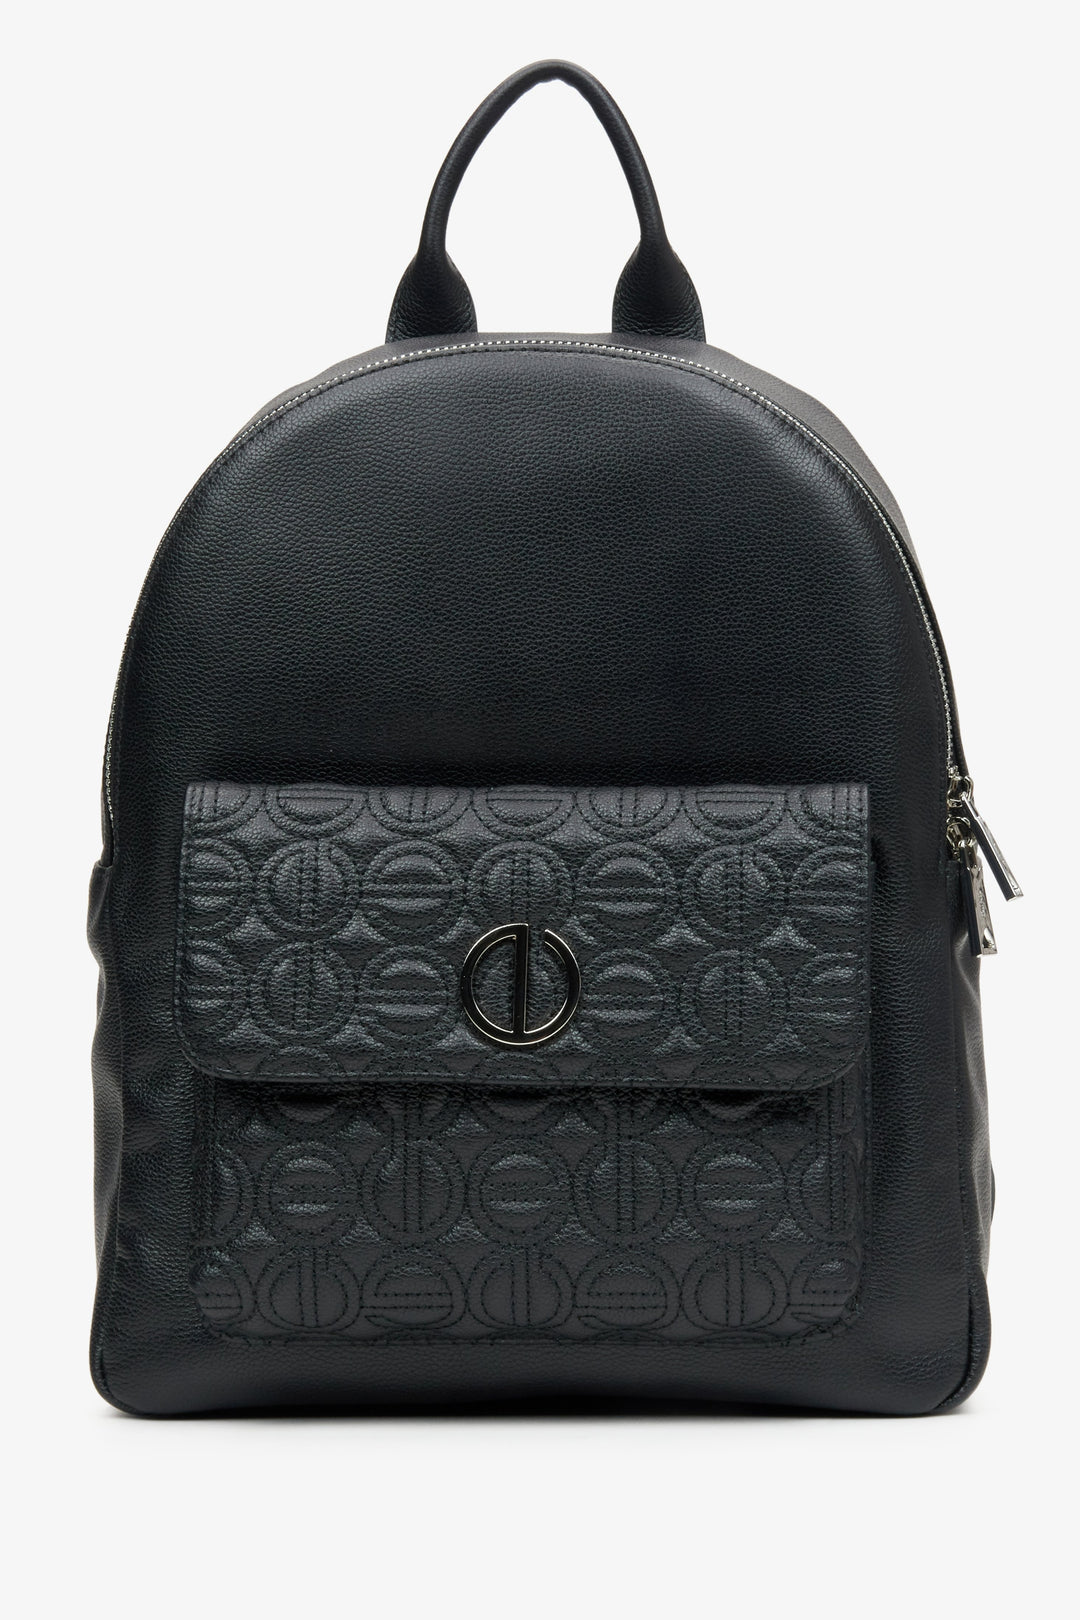 Women's Black Leather Backpack with Silver Details Estro ER00115047.